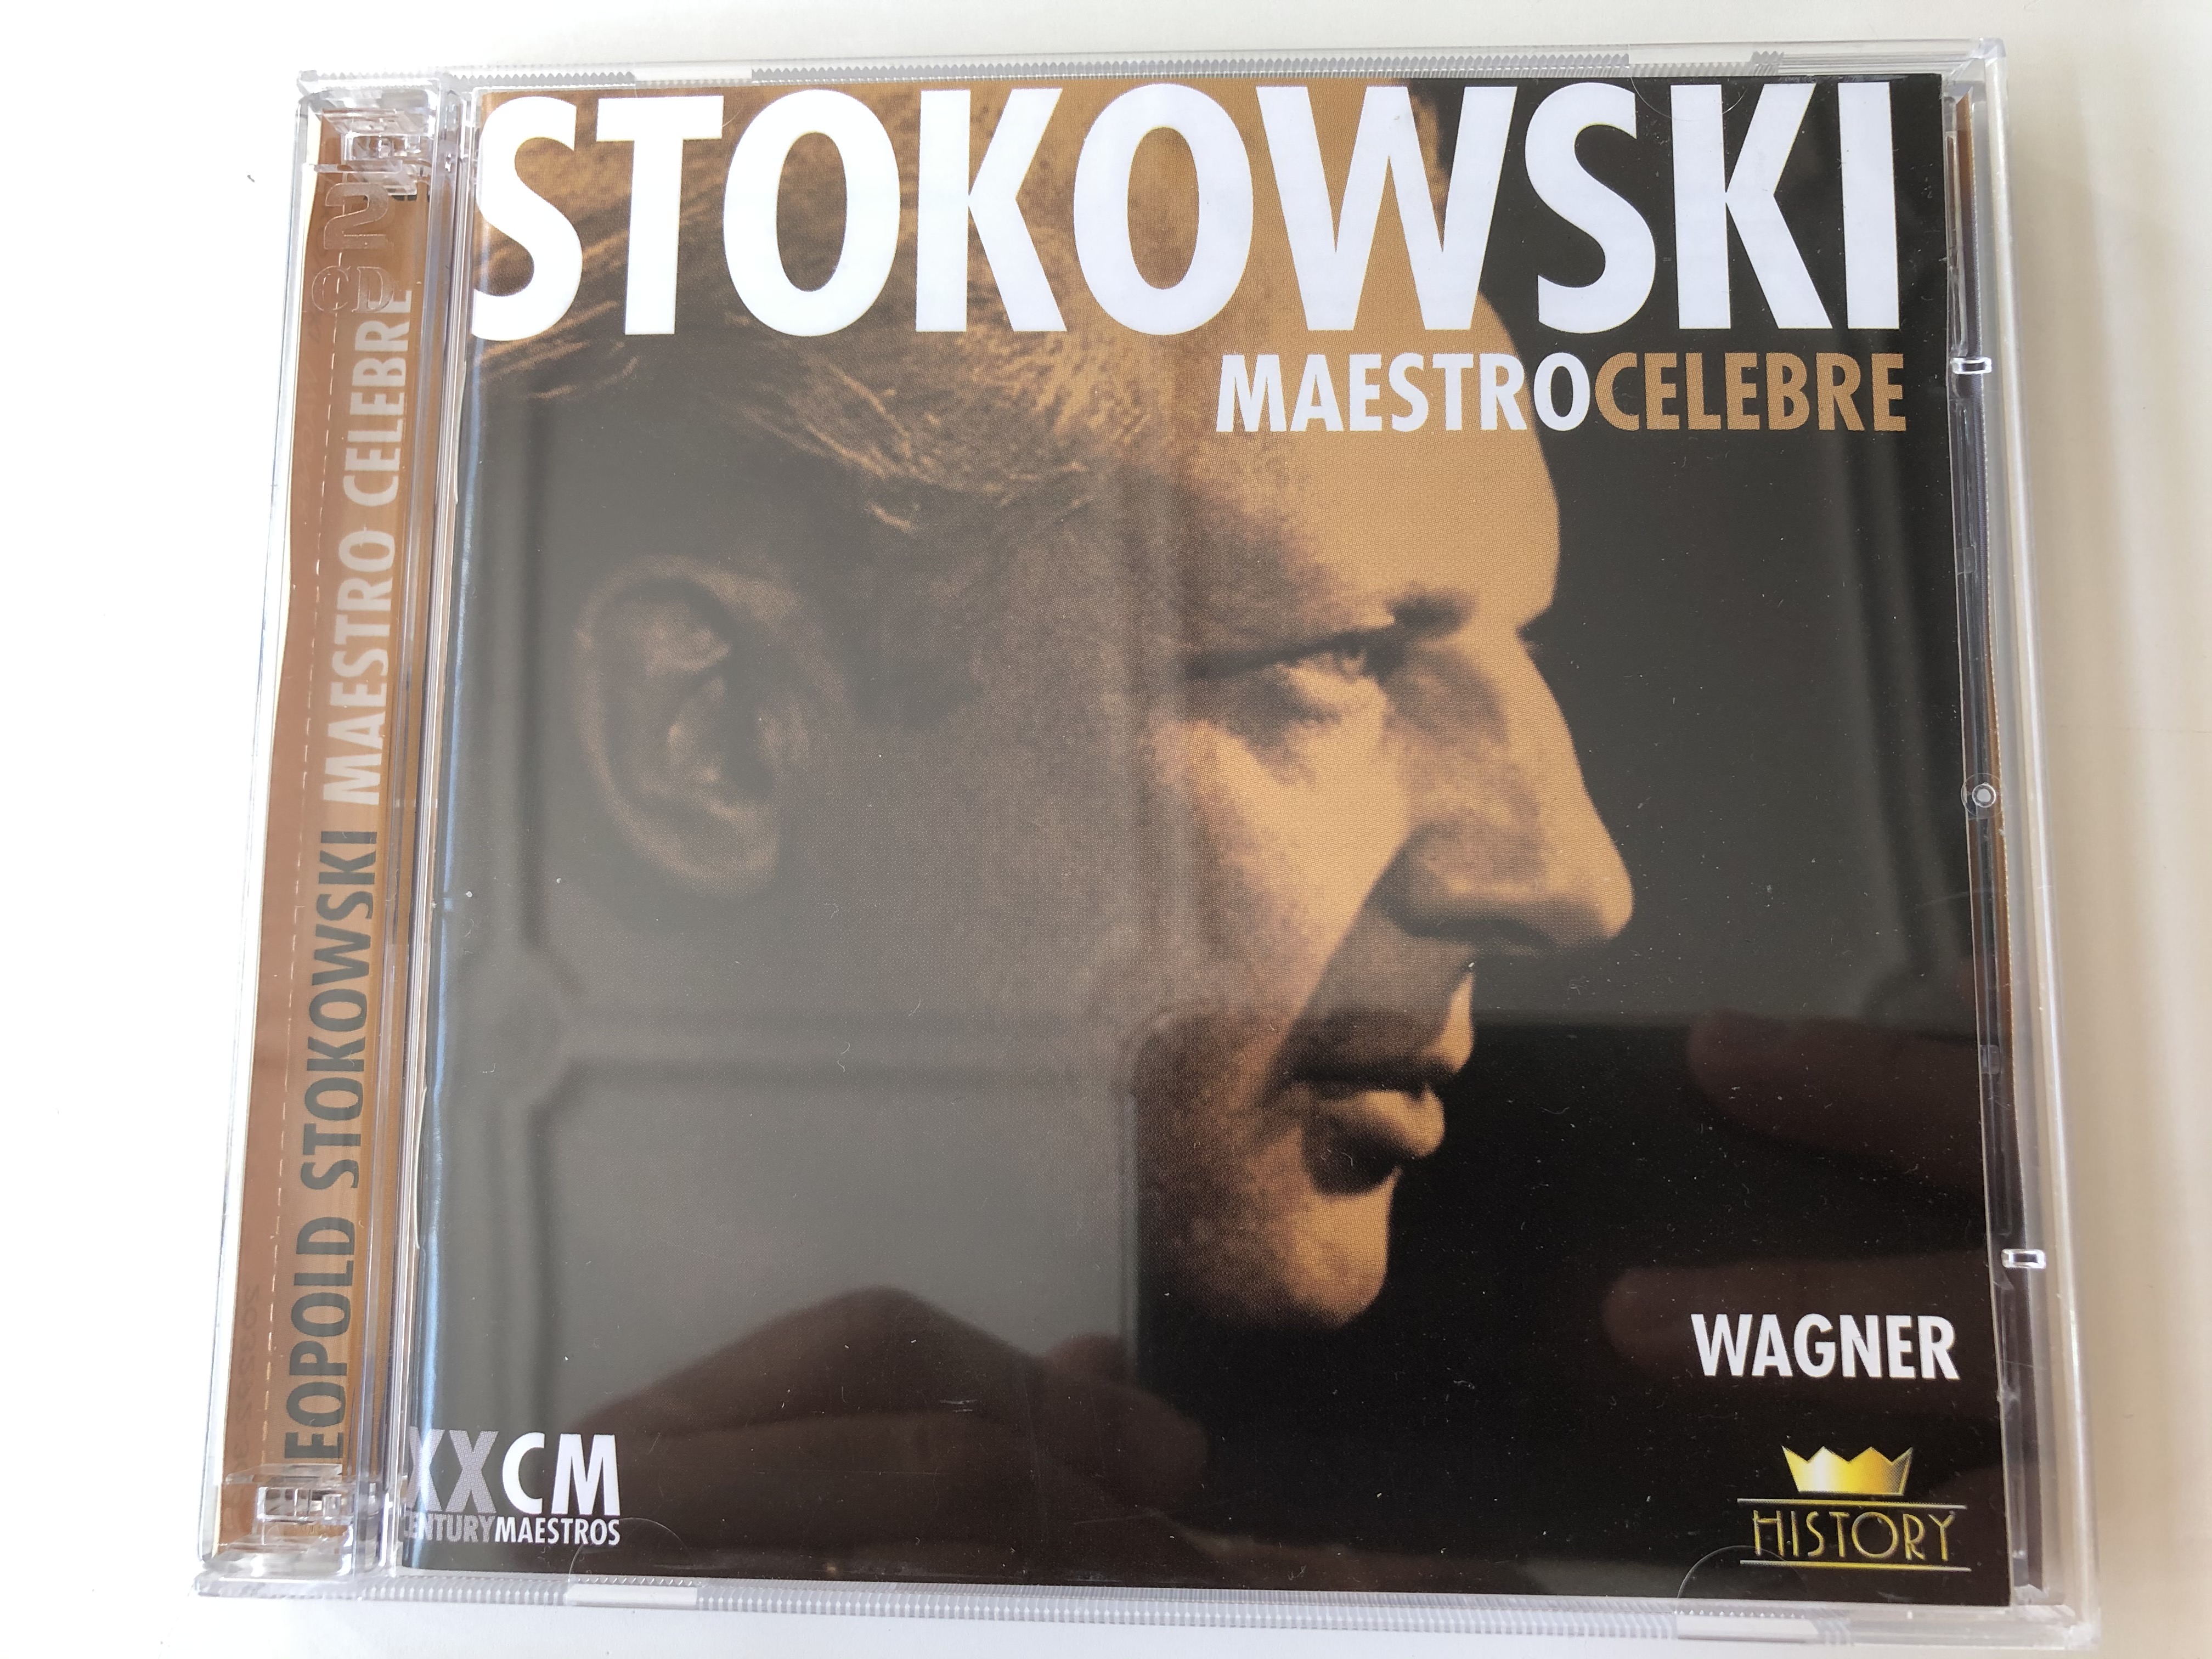 stokowski-maestro-celebre-wagner-history-2x-audio-cd-2001-2032921-303-1-.jpg